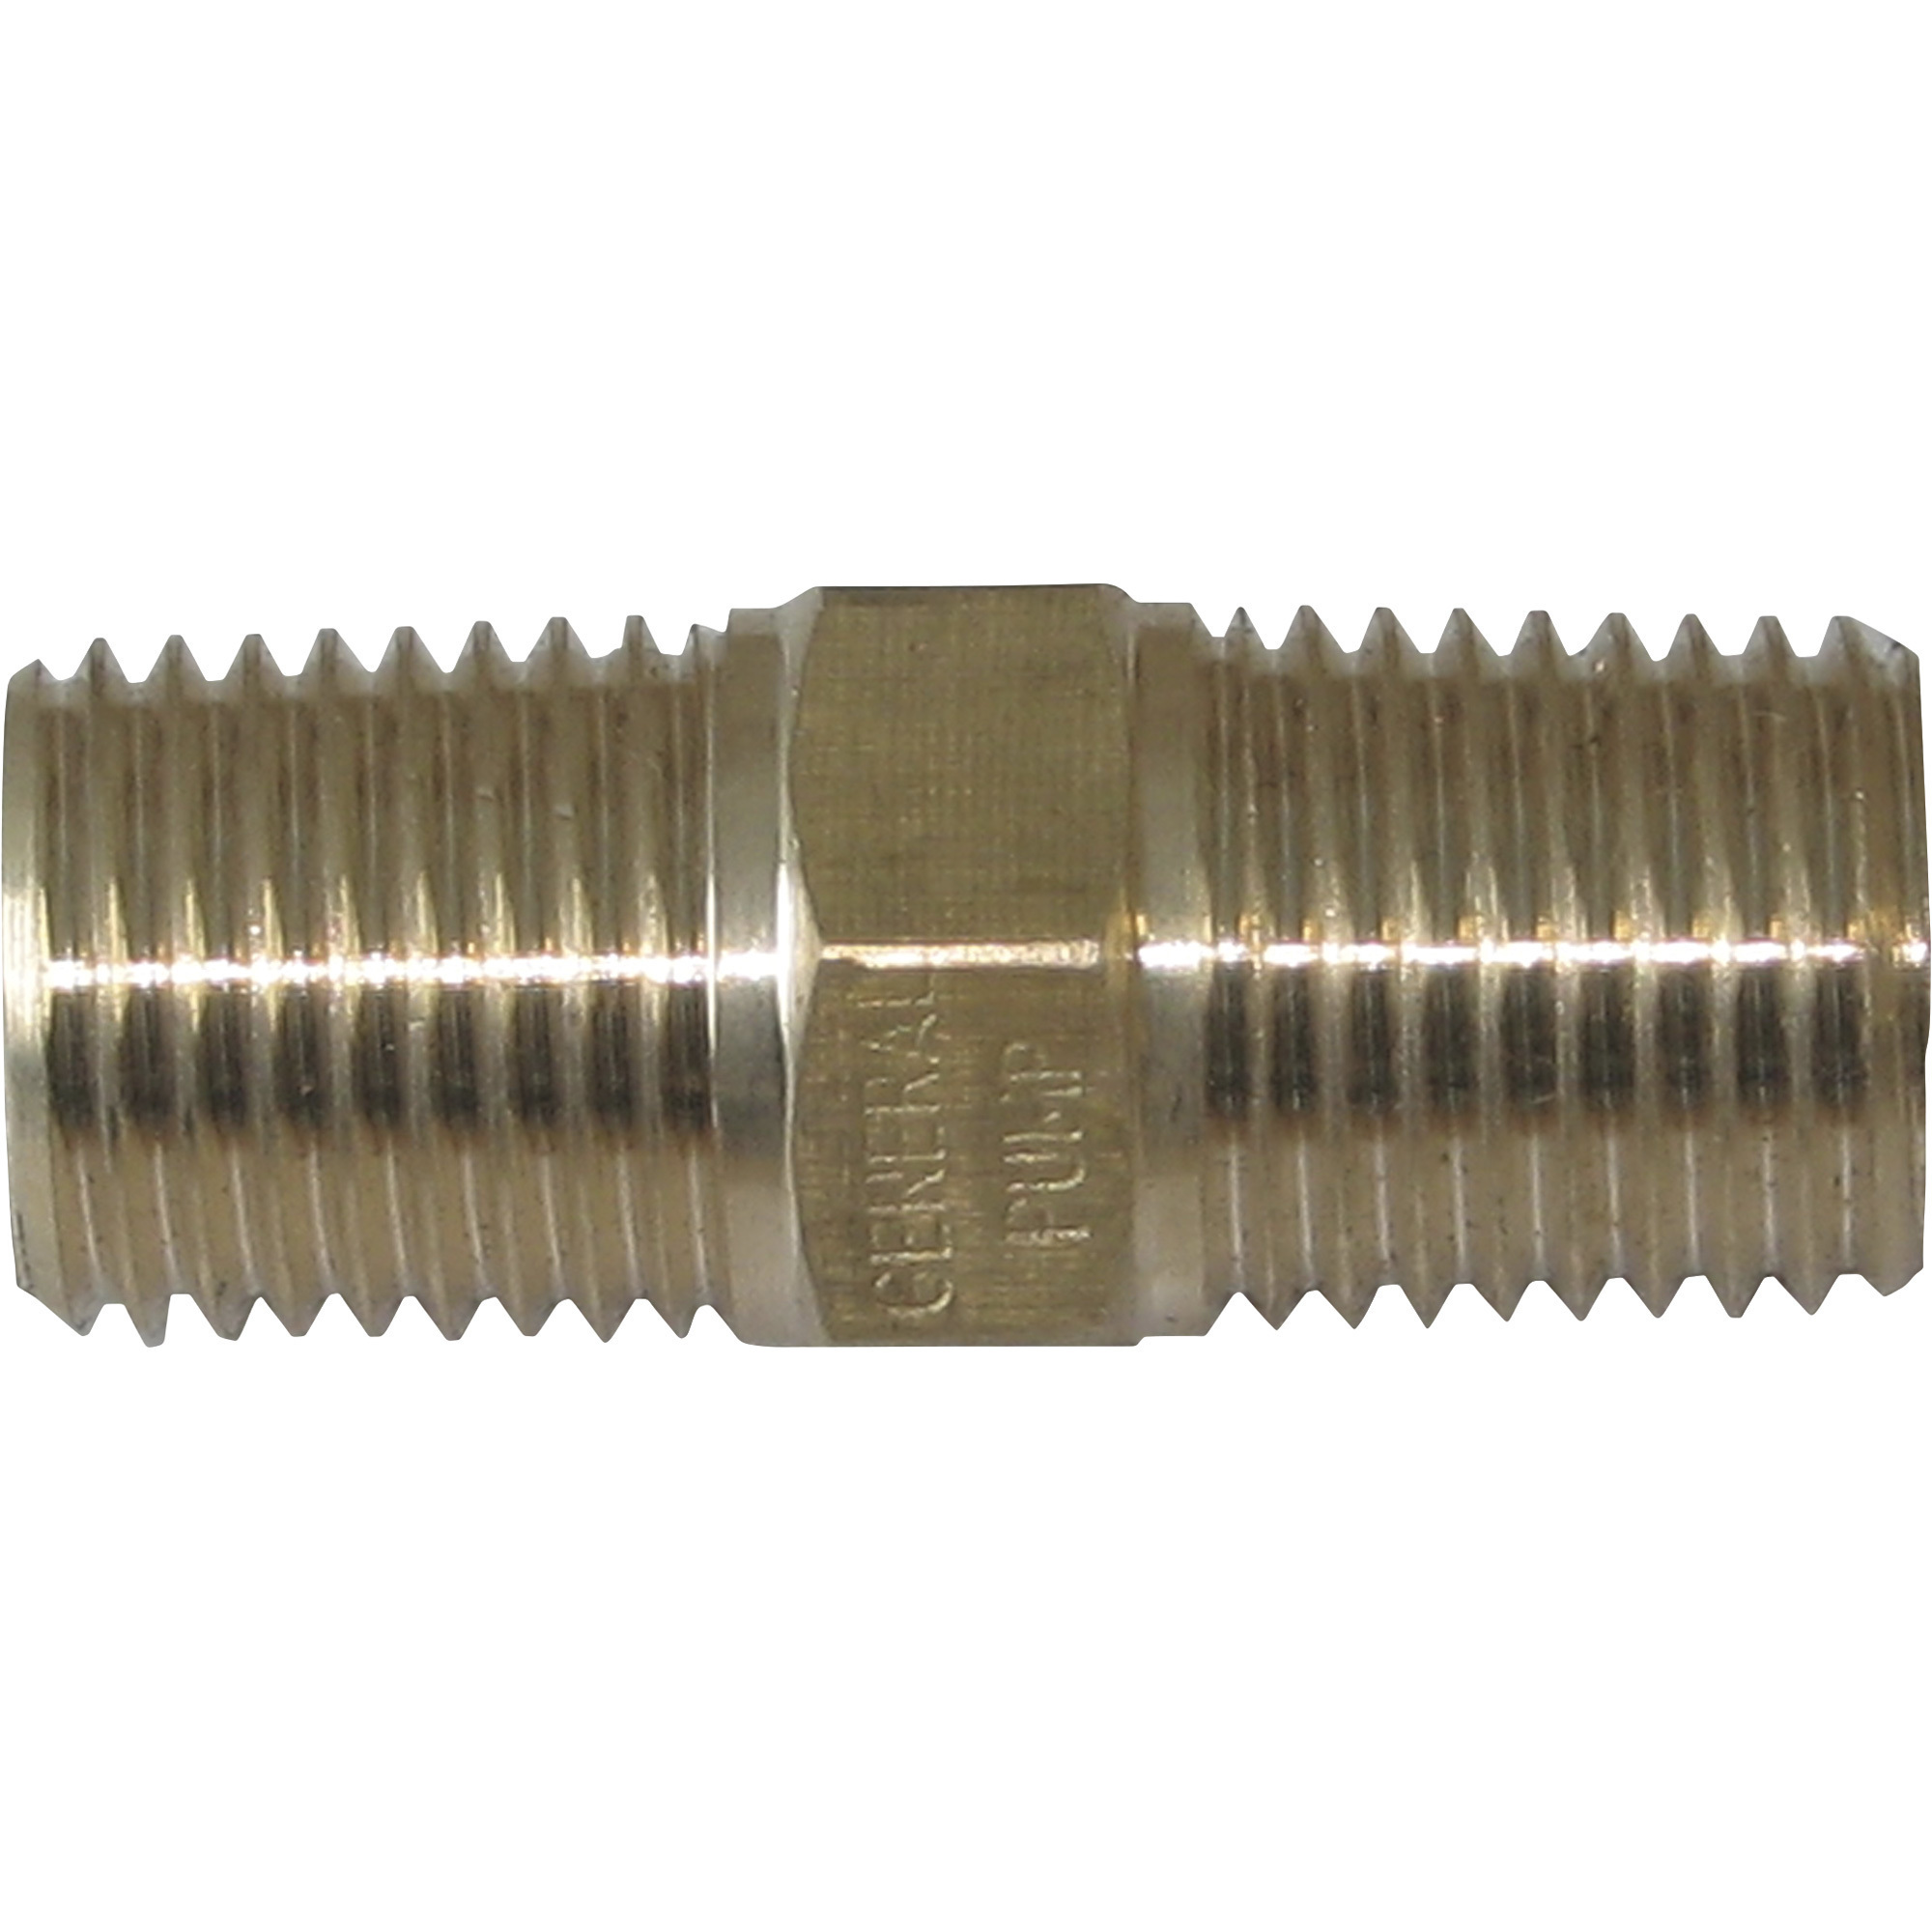 General Pump Brass Male Union Connector â 4000 PSI, 1/4Inch NPT-M, Brass, Model ND10014P